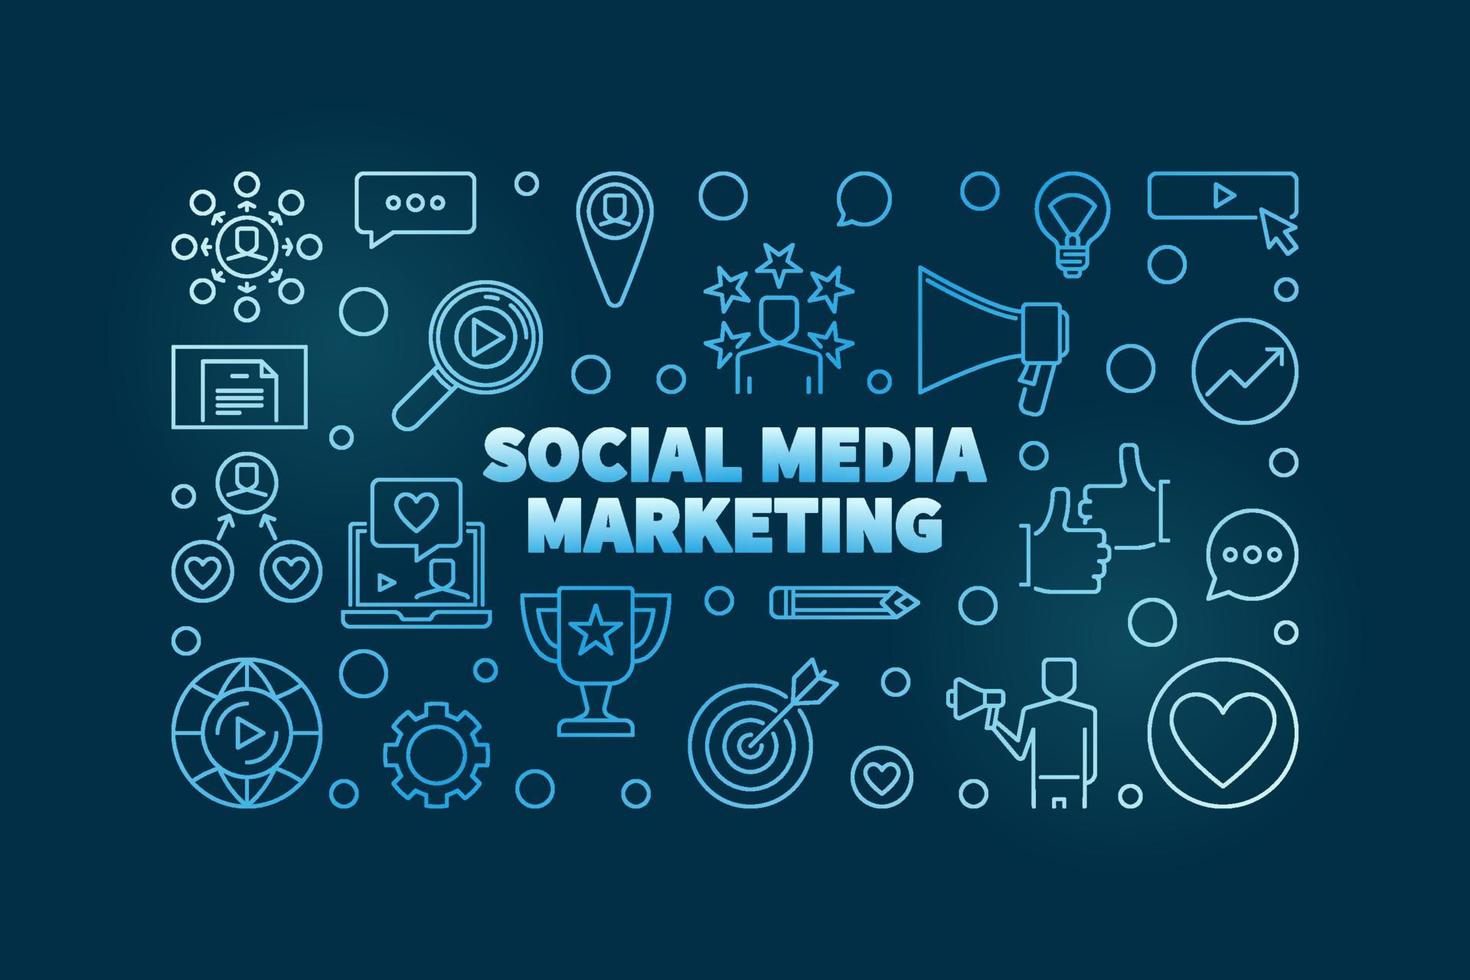 social media marketing vektor blau lineare horizontale illustration